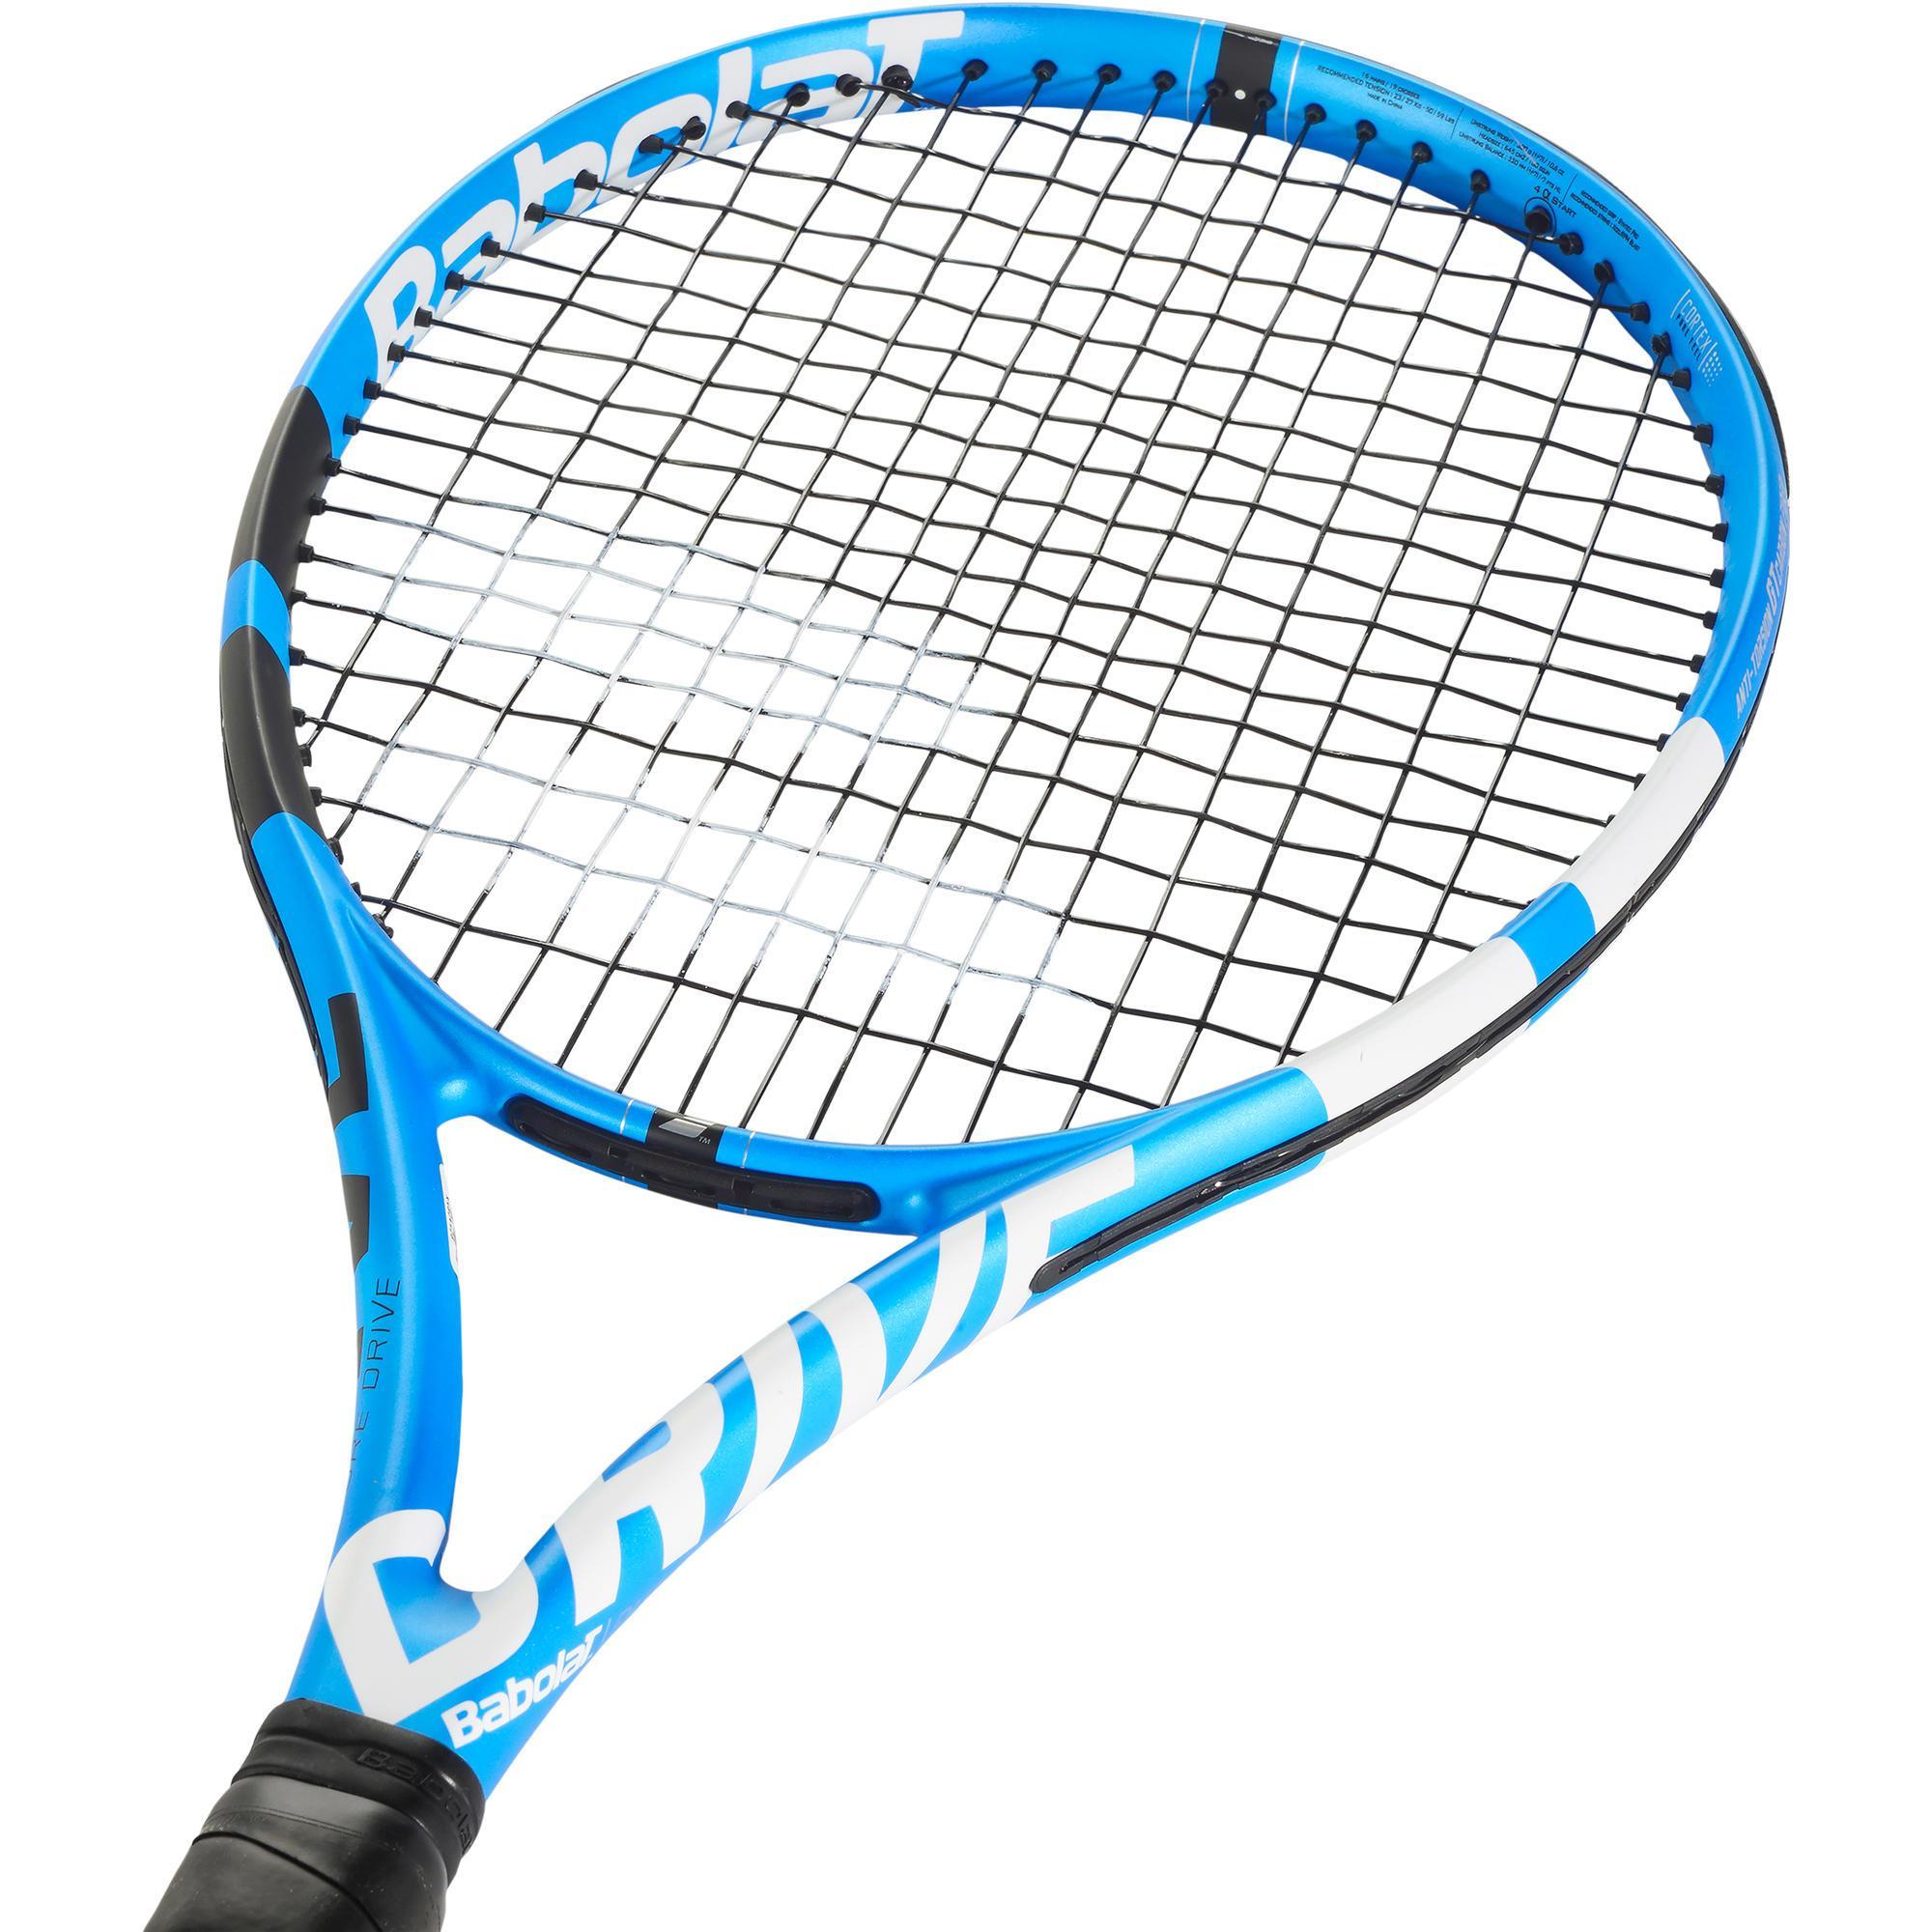 Pure Drive Adult Tennis Racket - Blue 